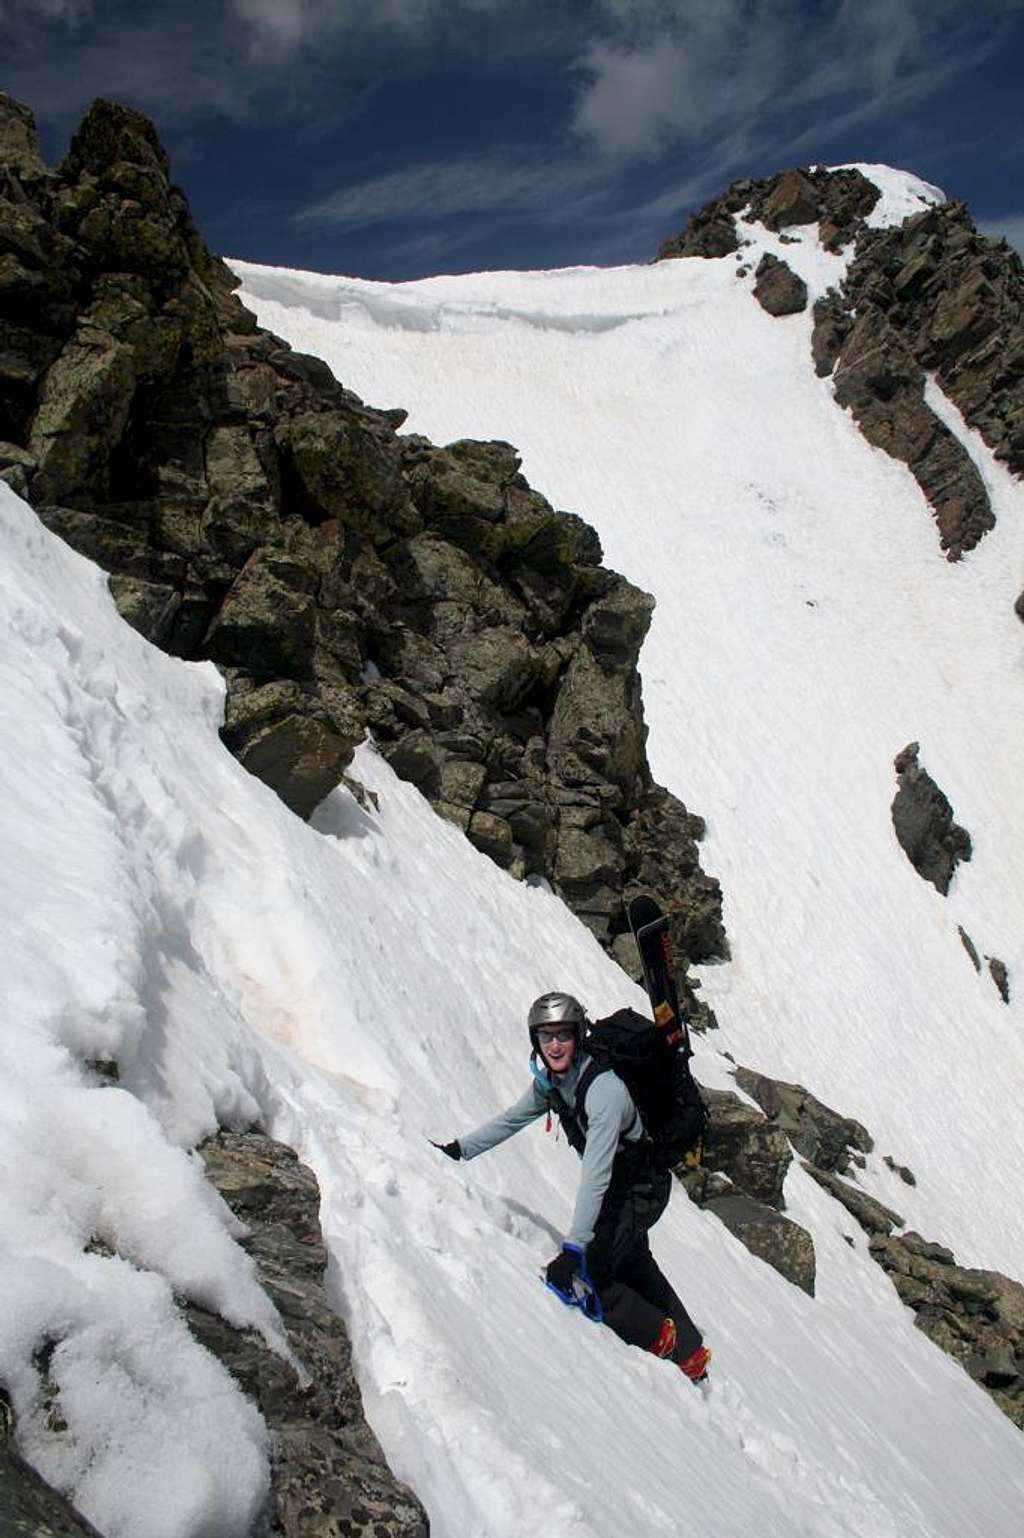 Andy nearing the ridge